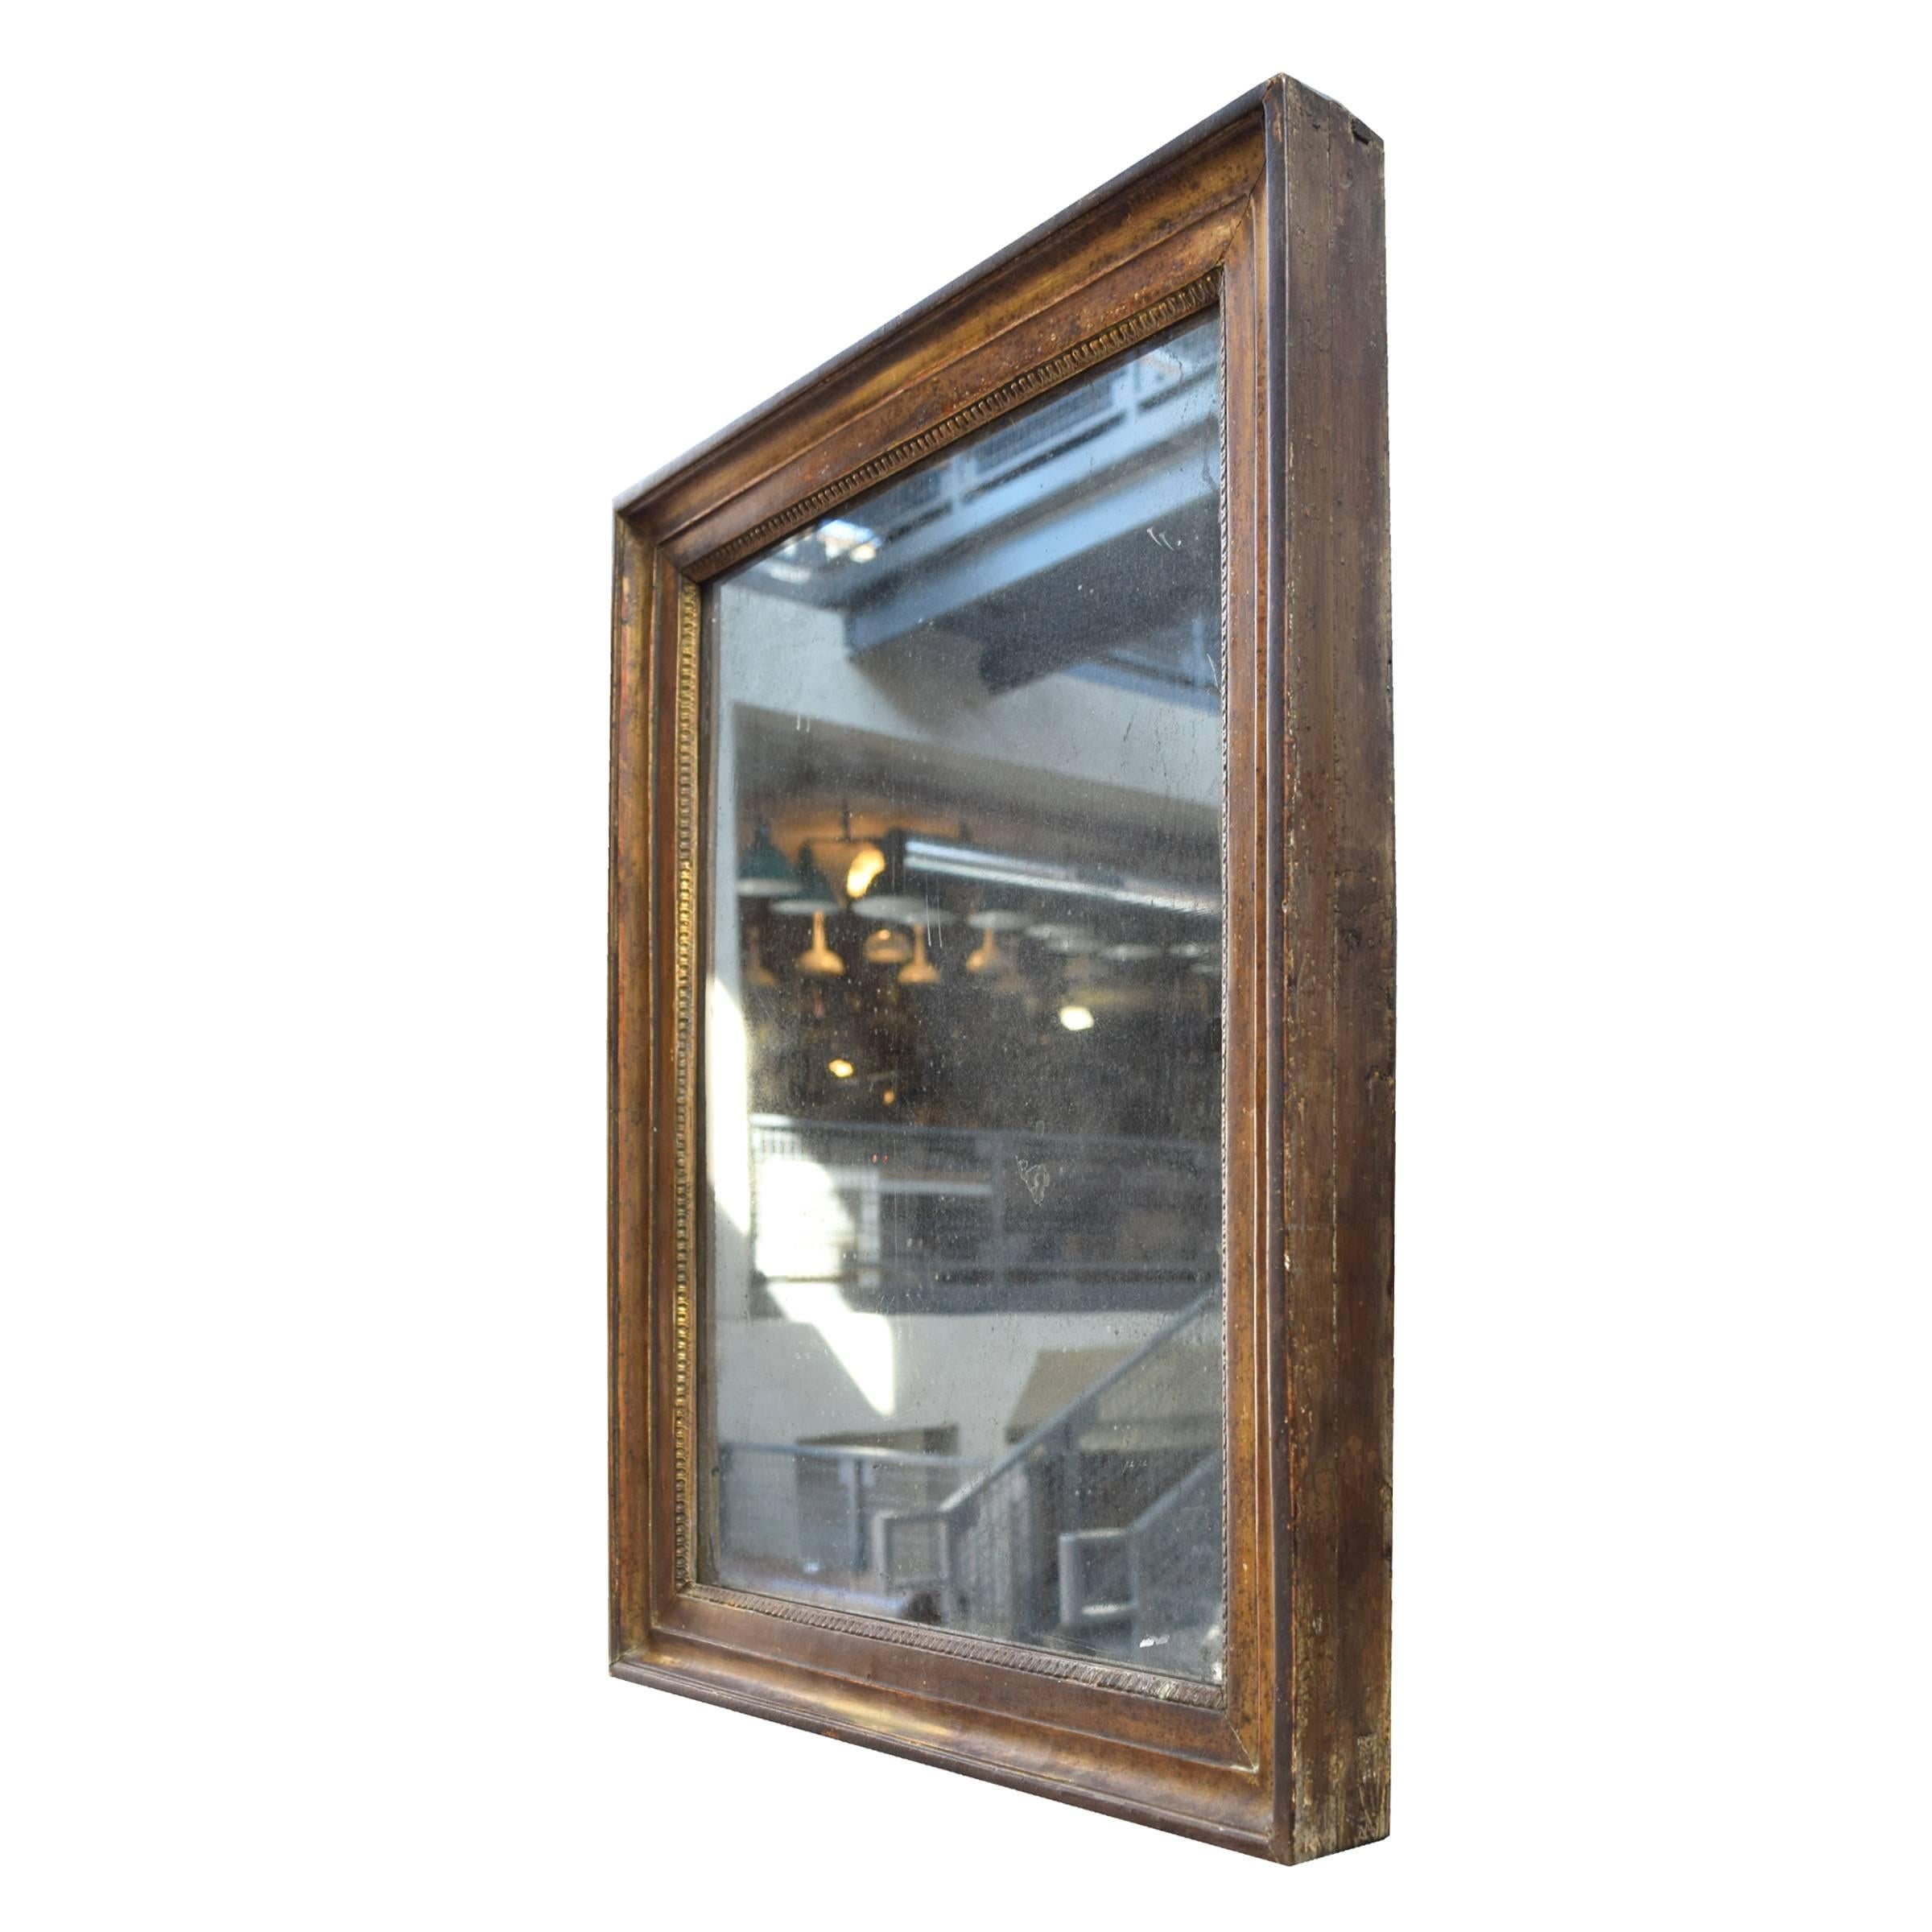 A French 19th century gilt frame with original mirror. Wonderful patina!
   